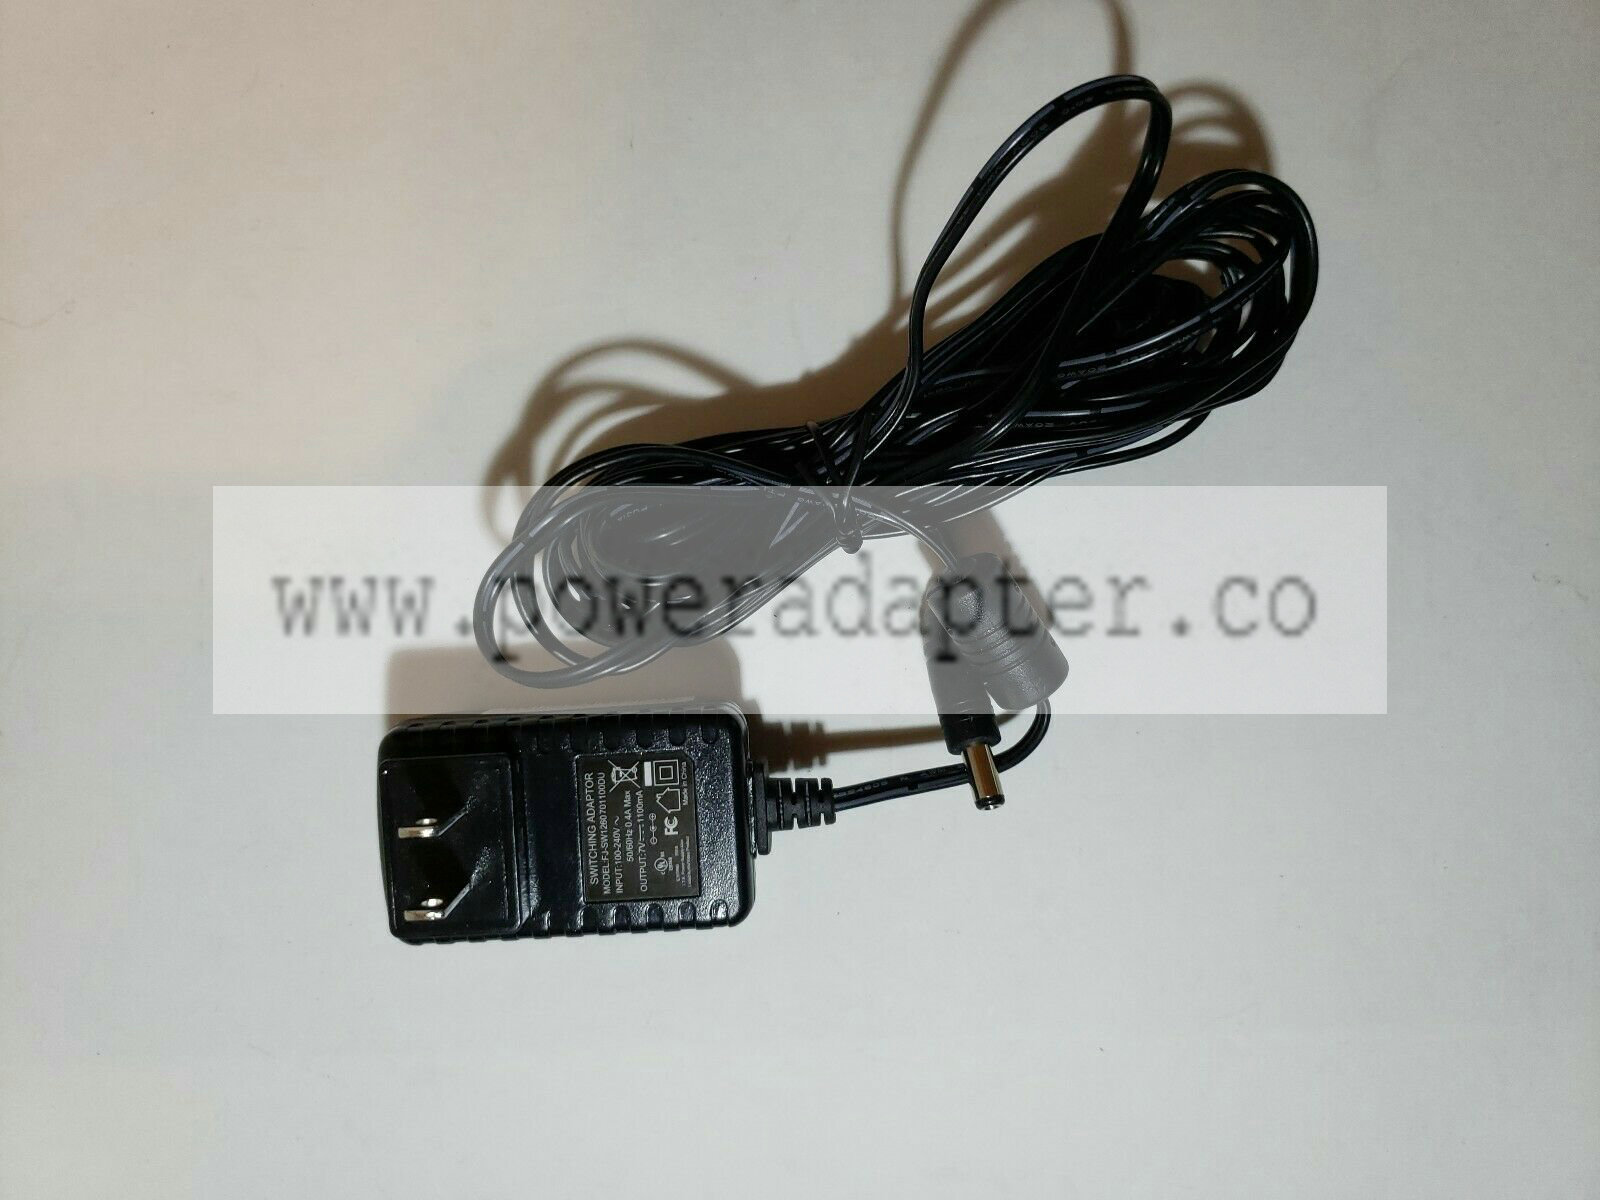 Switching Adaptor Power Supply AC/DC Adapter FJ-SW1260701100DU 7V 1100mA Type: AC/DC Adapter Output Voltage: 7 V Bra